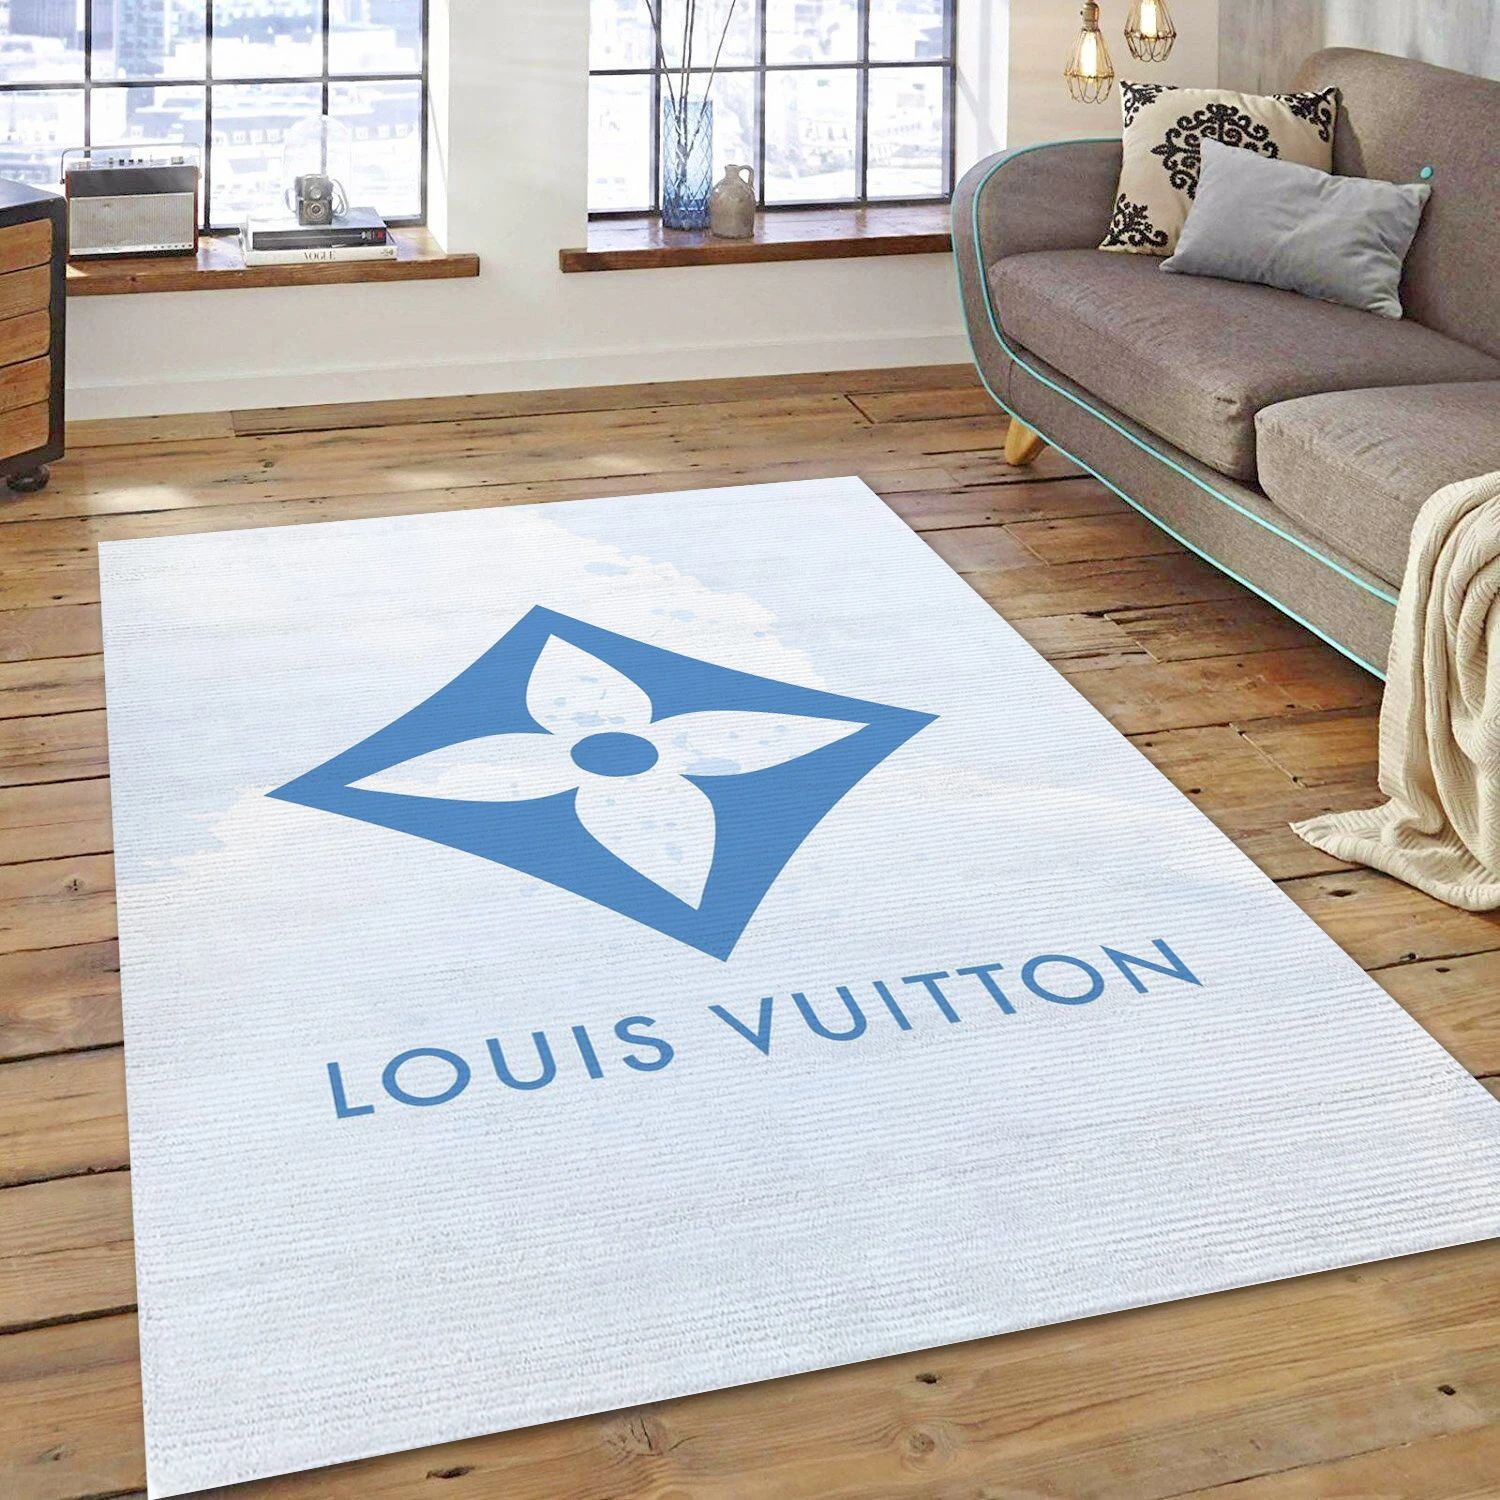 Louis Vuitton Fashion Logo Area Rug, Bedroom Rug - Home Decor Floor Decor - Indoor Outdoor Rugs